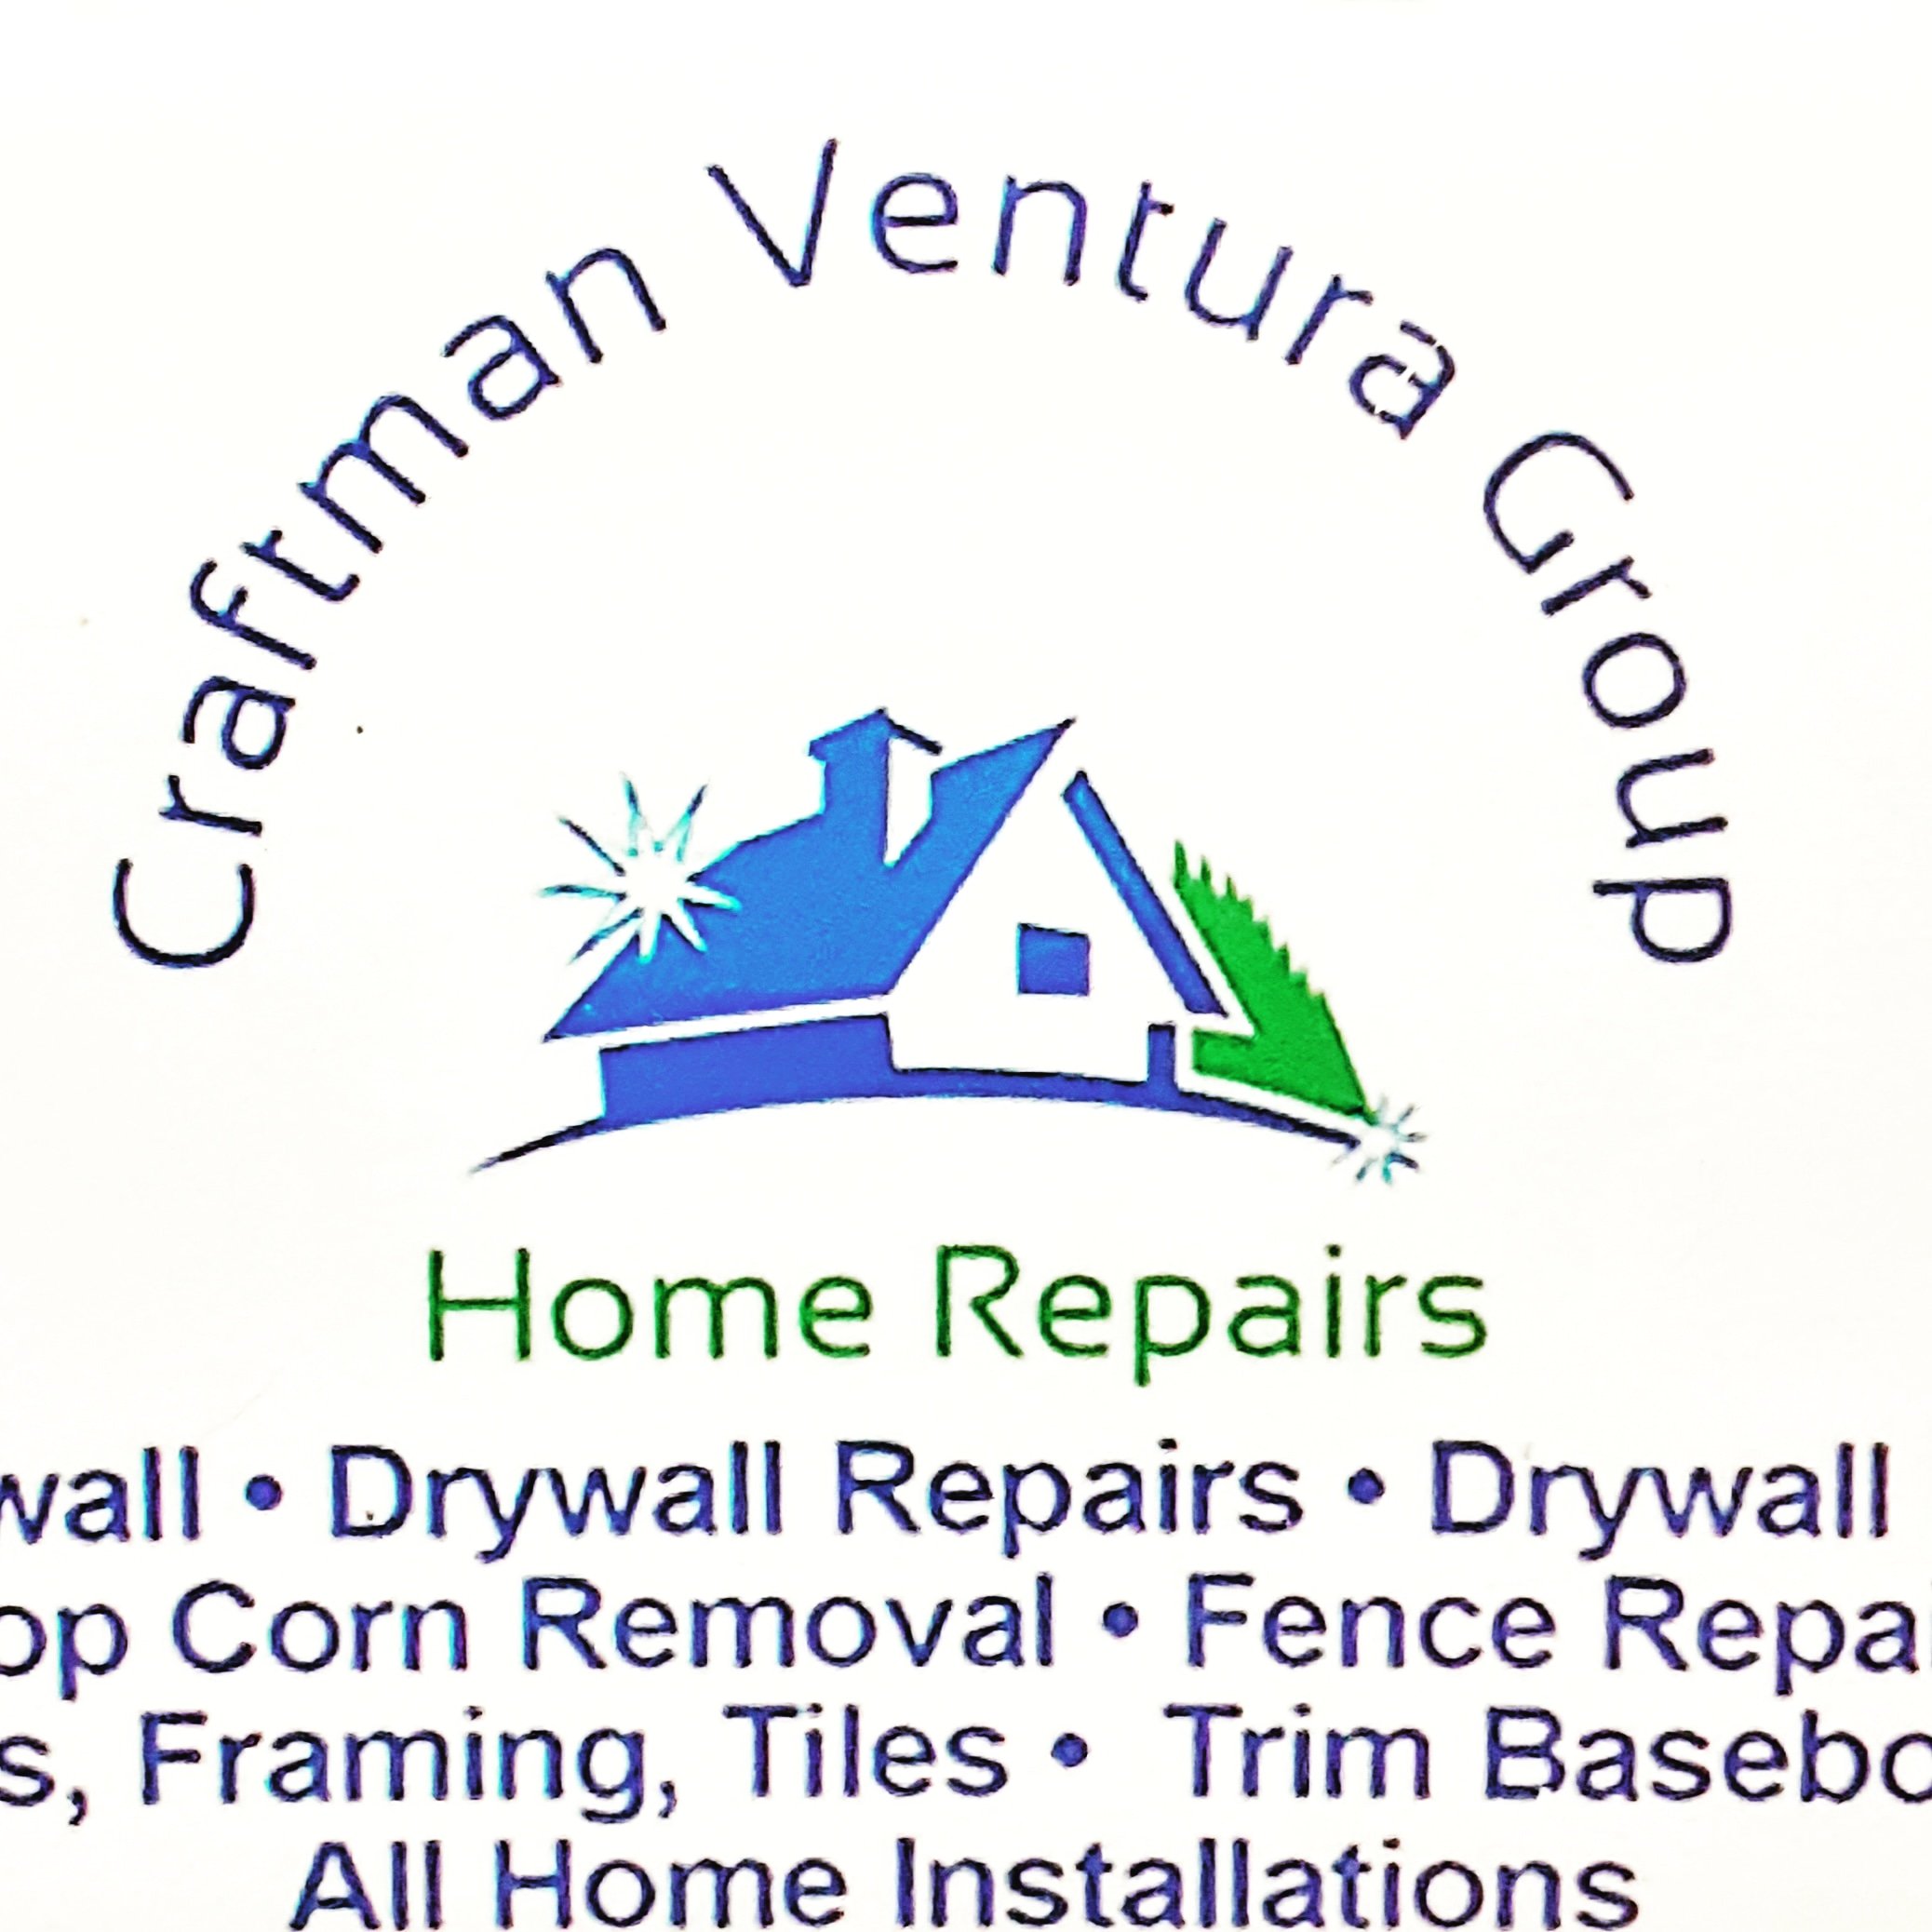 Craftman Ventura Group, LLC Logo